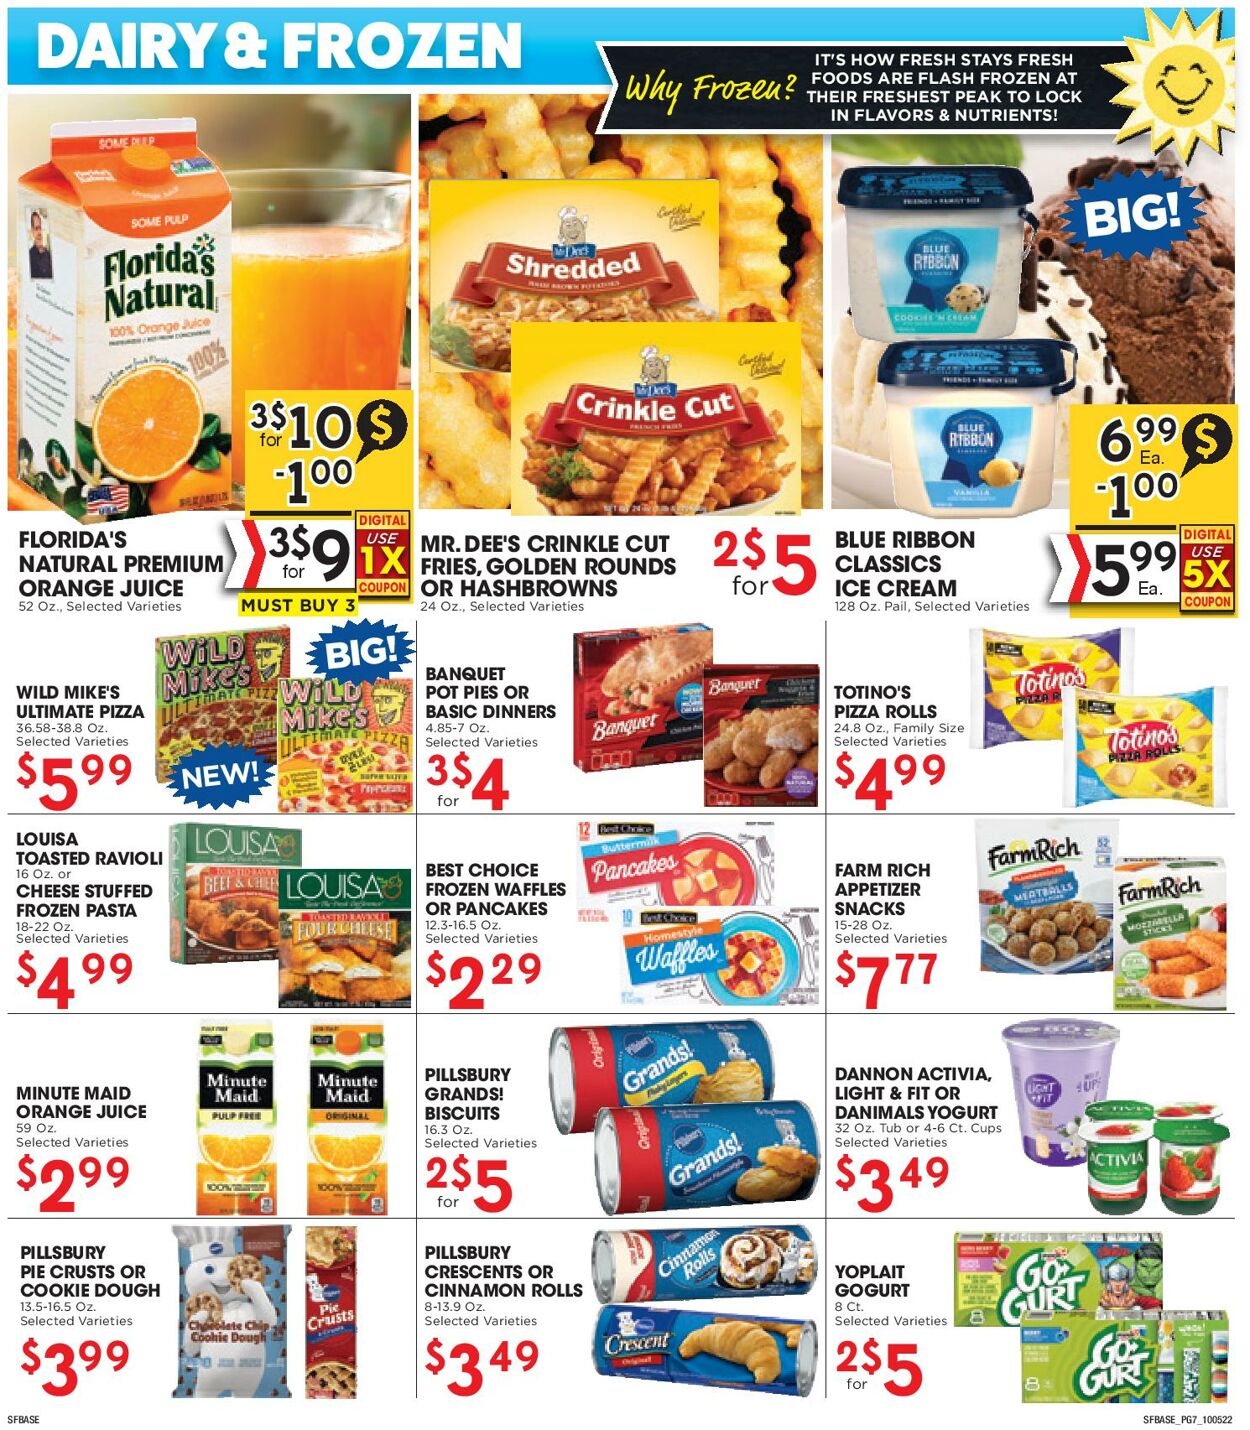 Weekly ad Sunshine Foods 10/05/2022 - 10/11/2022